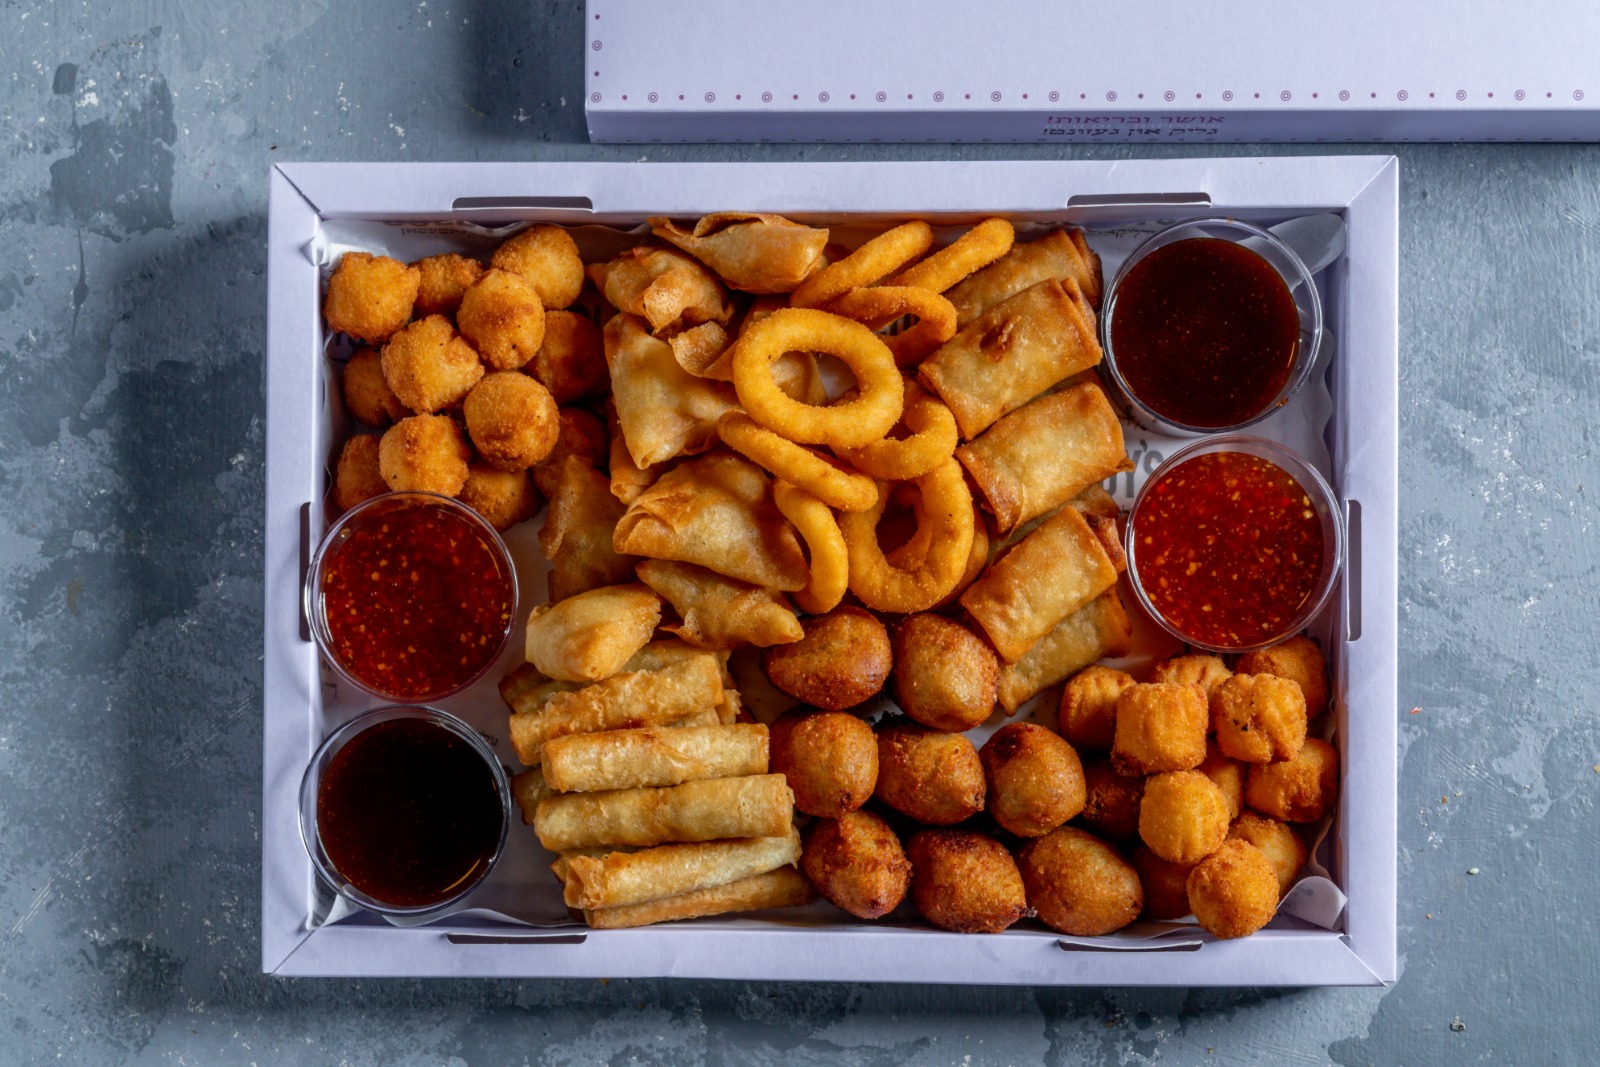 A tray of fried dumplings + condiments